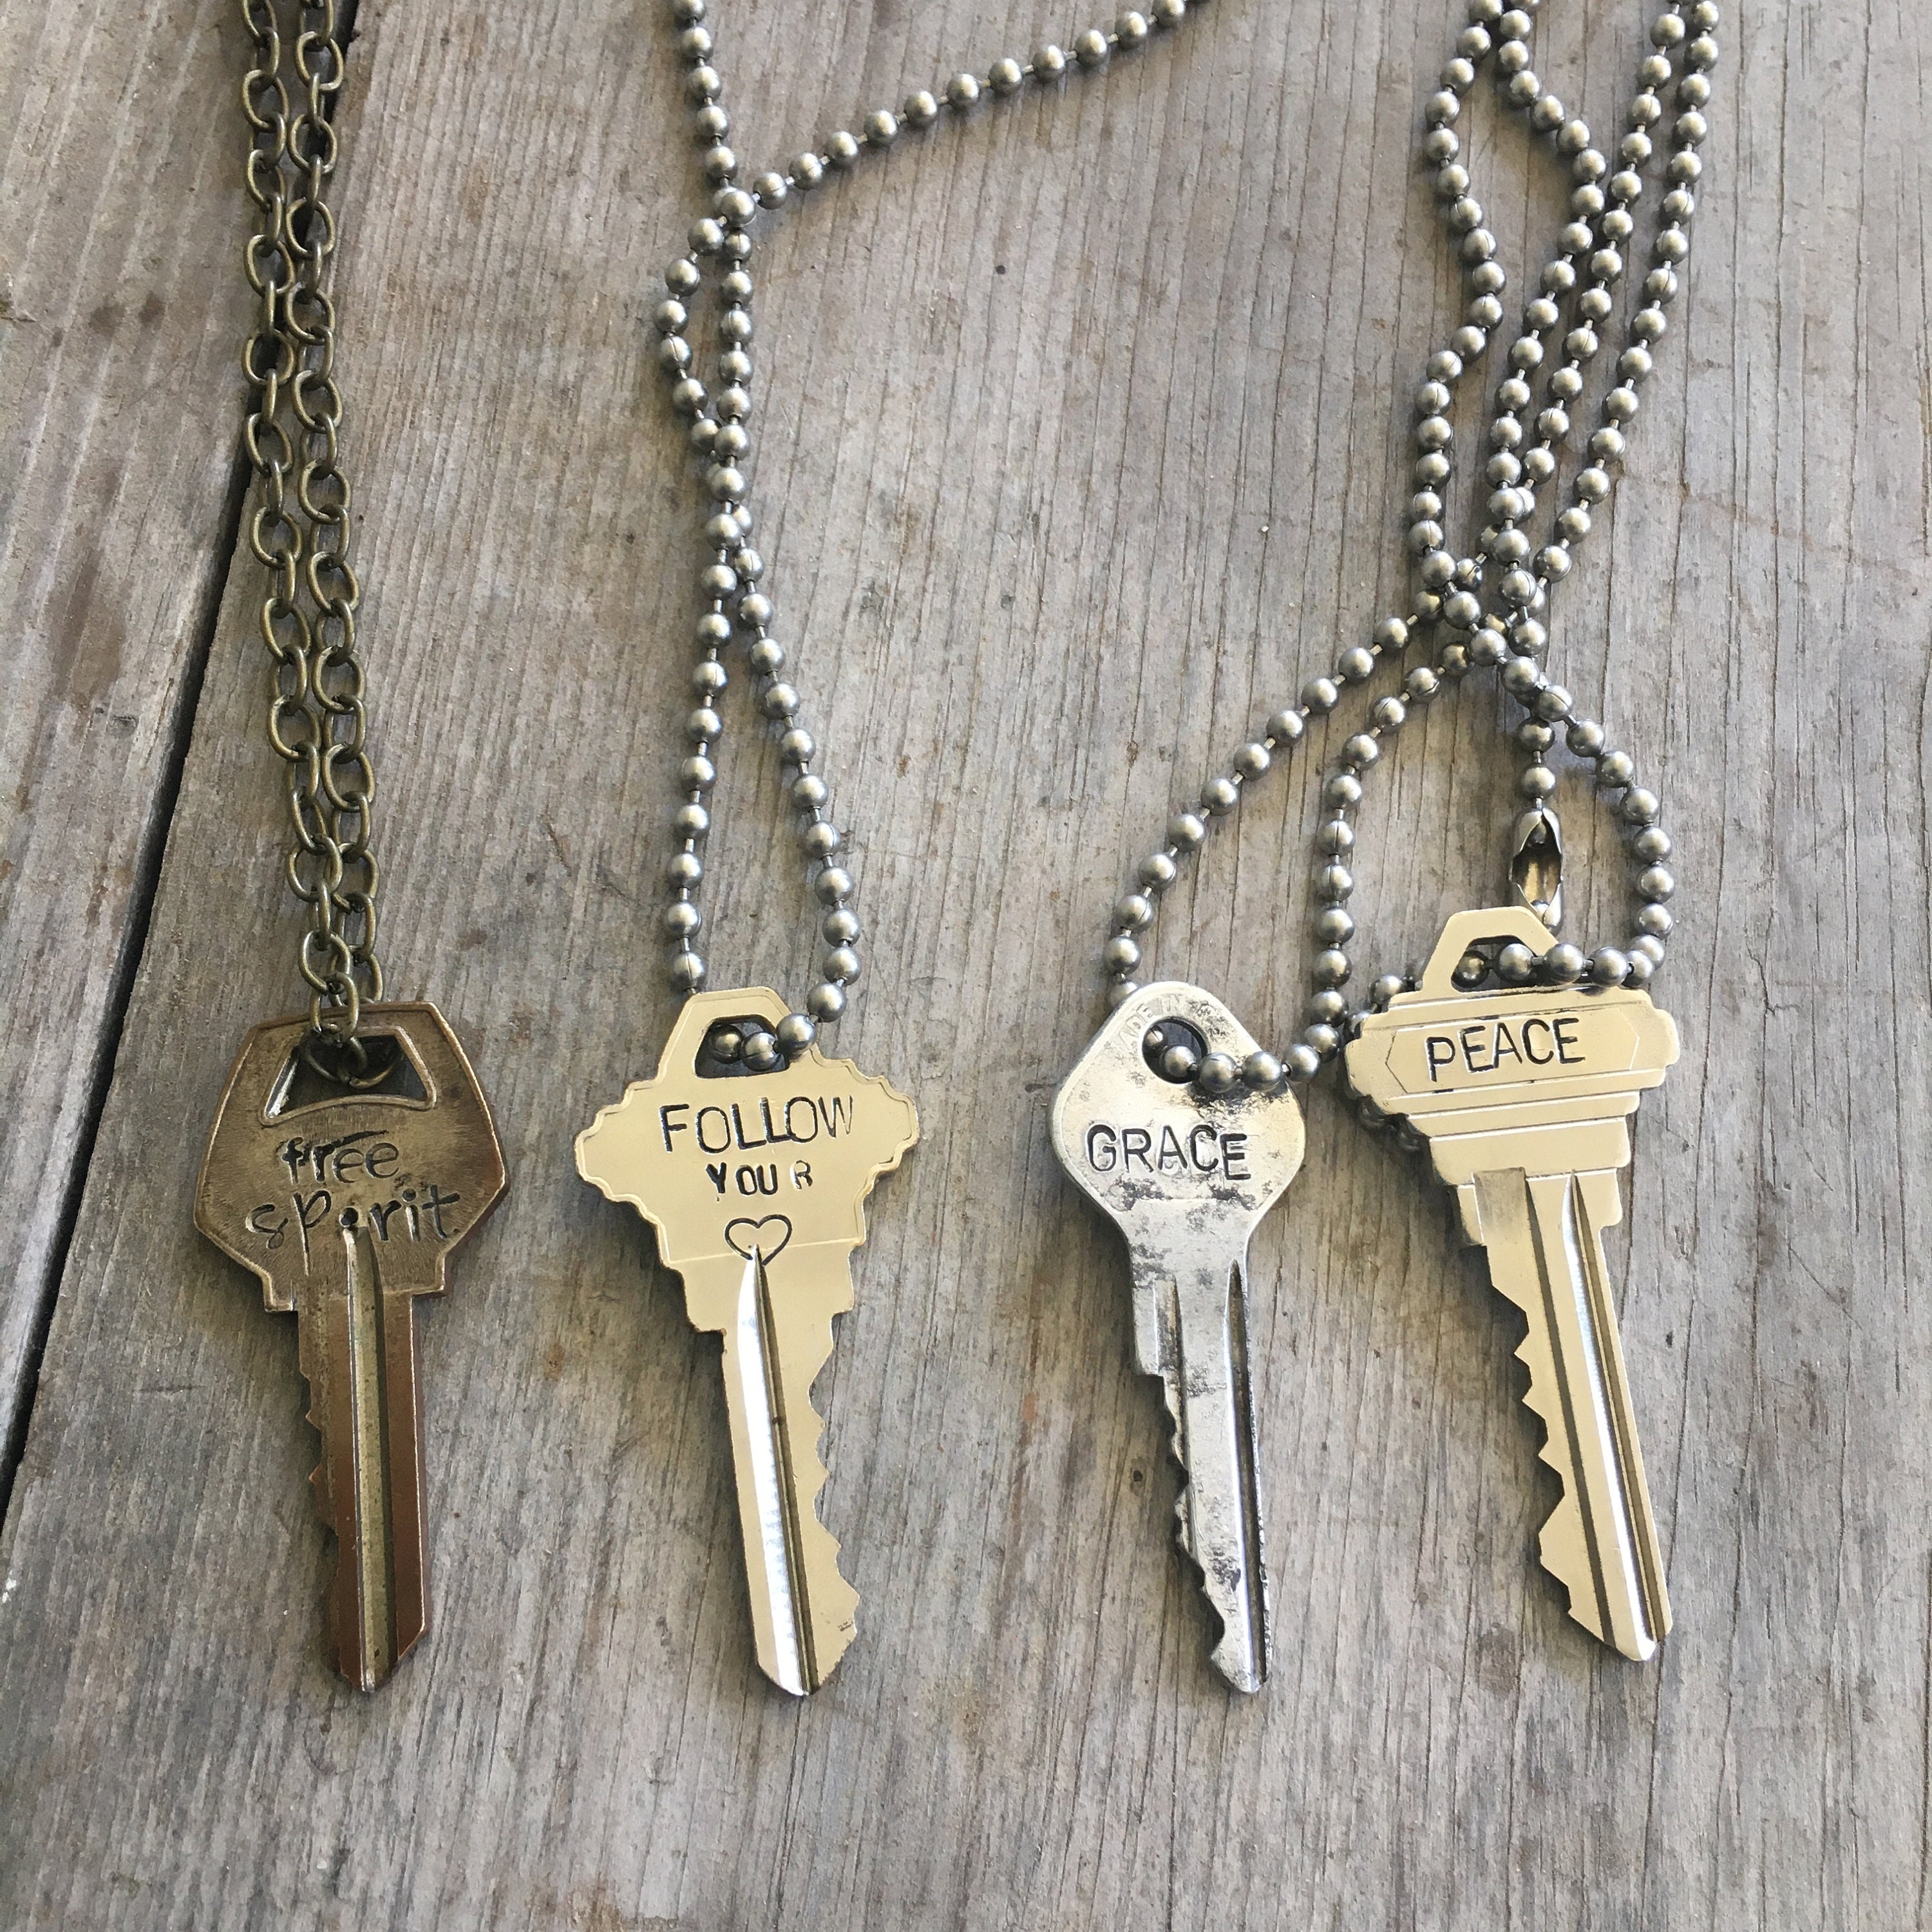 Golden Key Necklace – goldenkey.gift